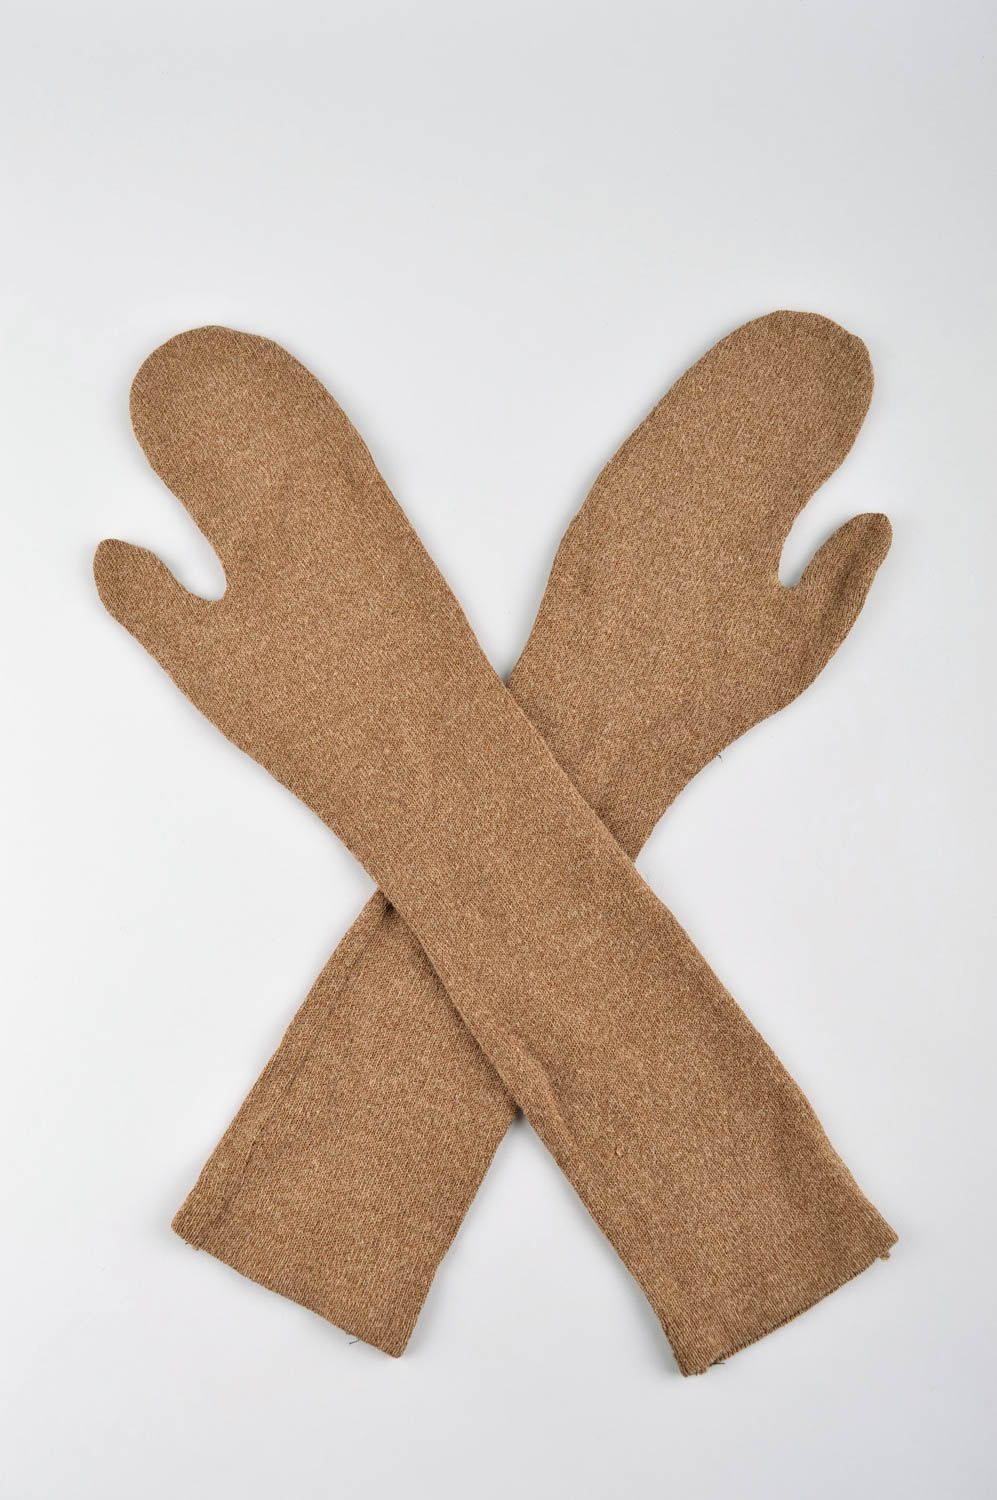 Handmade winter gloves winter accessories stylish fabric gloves for women photo 2